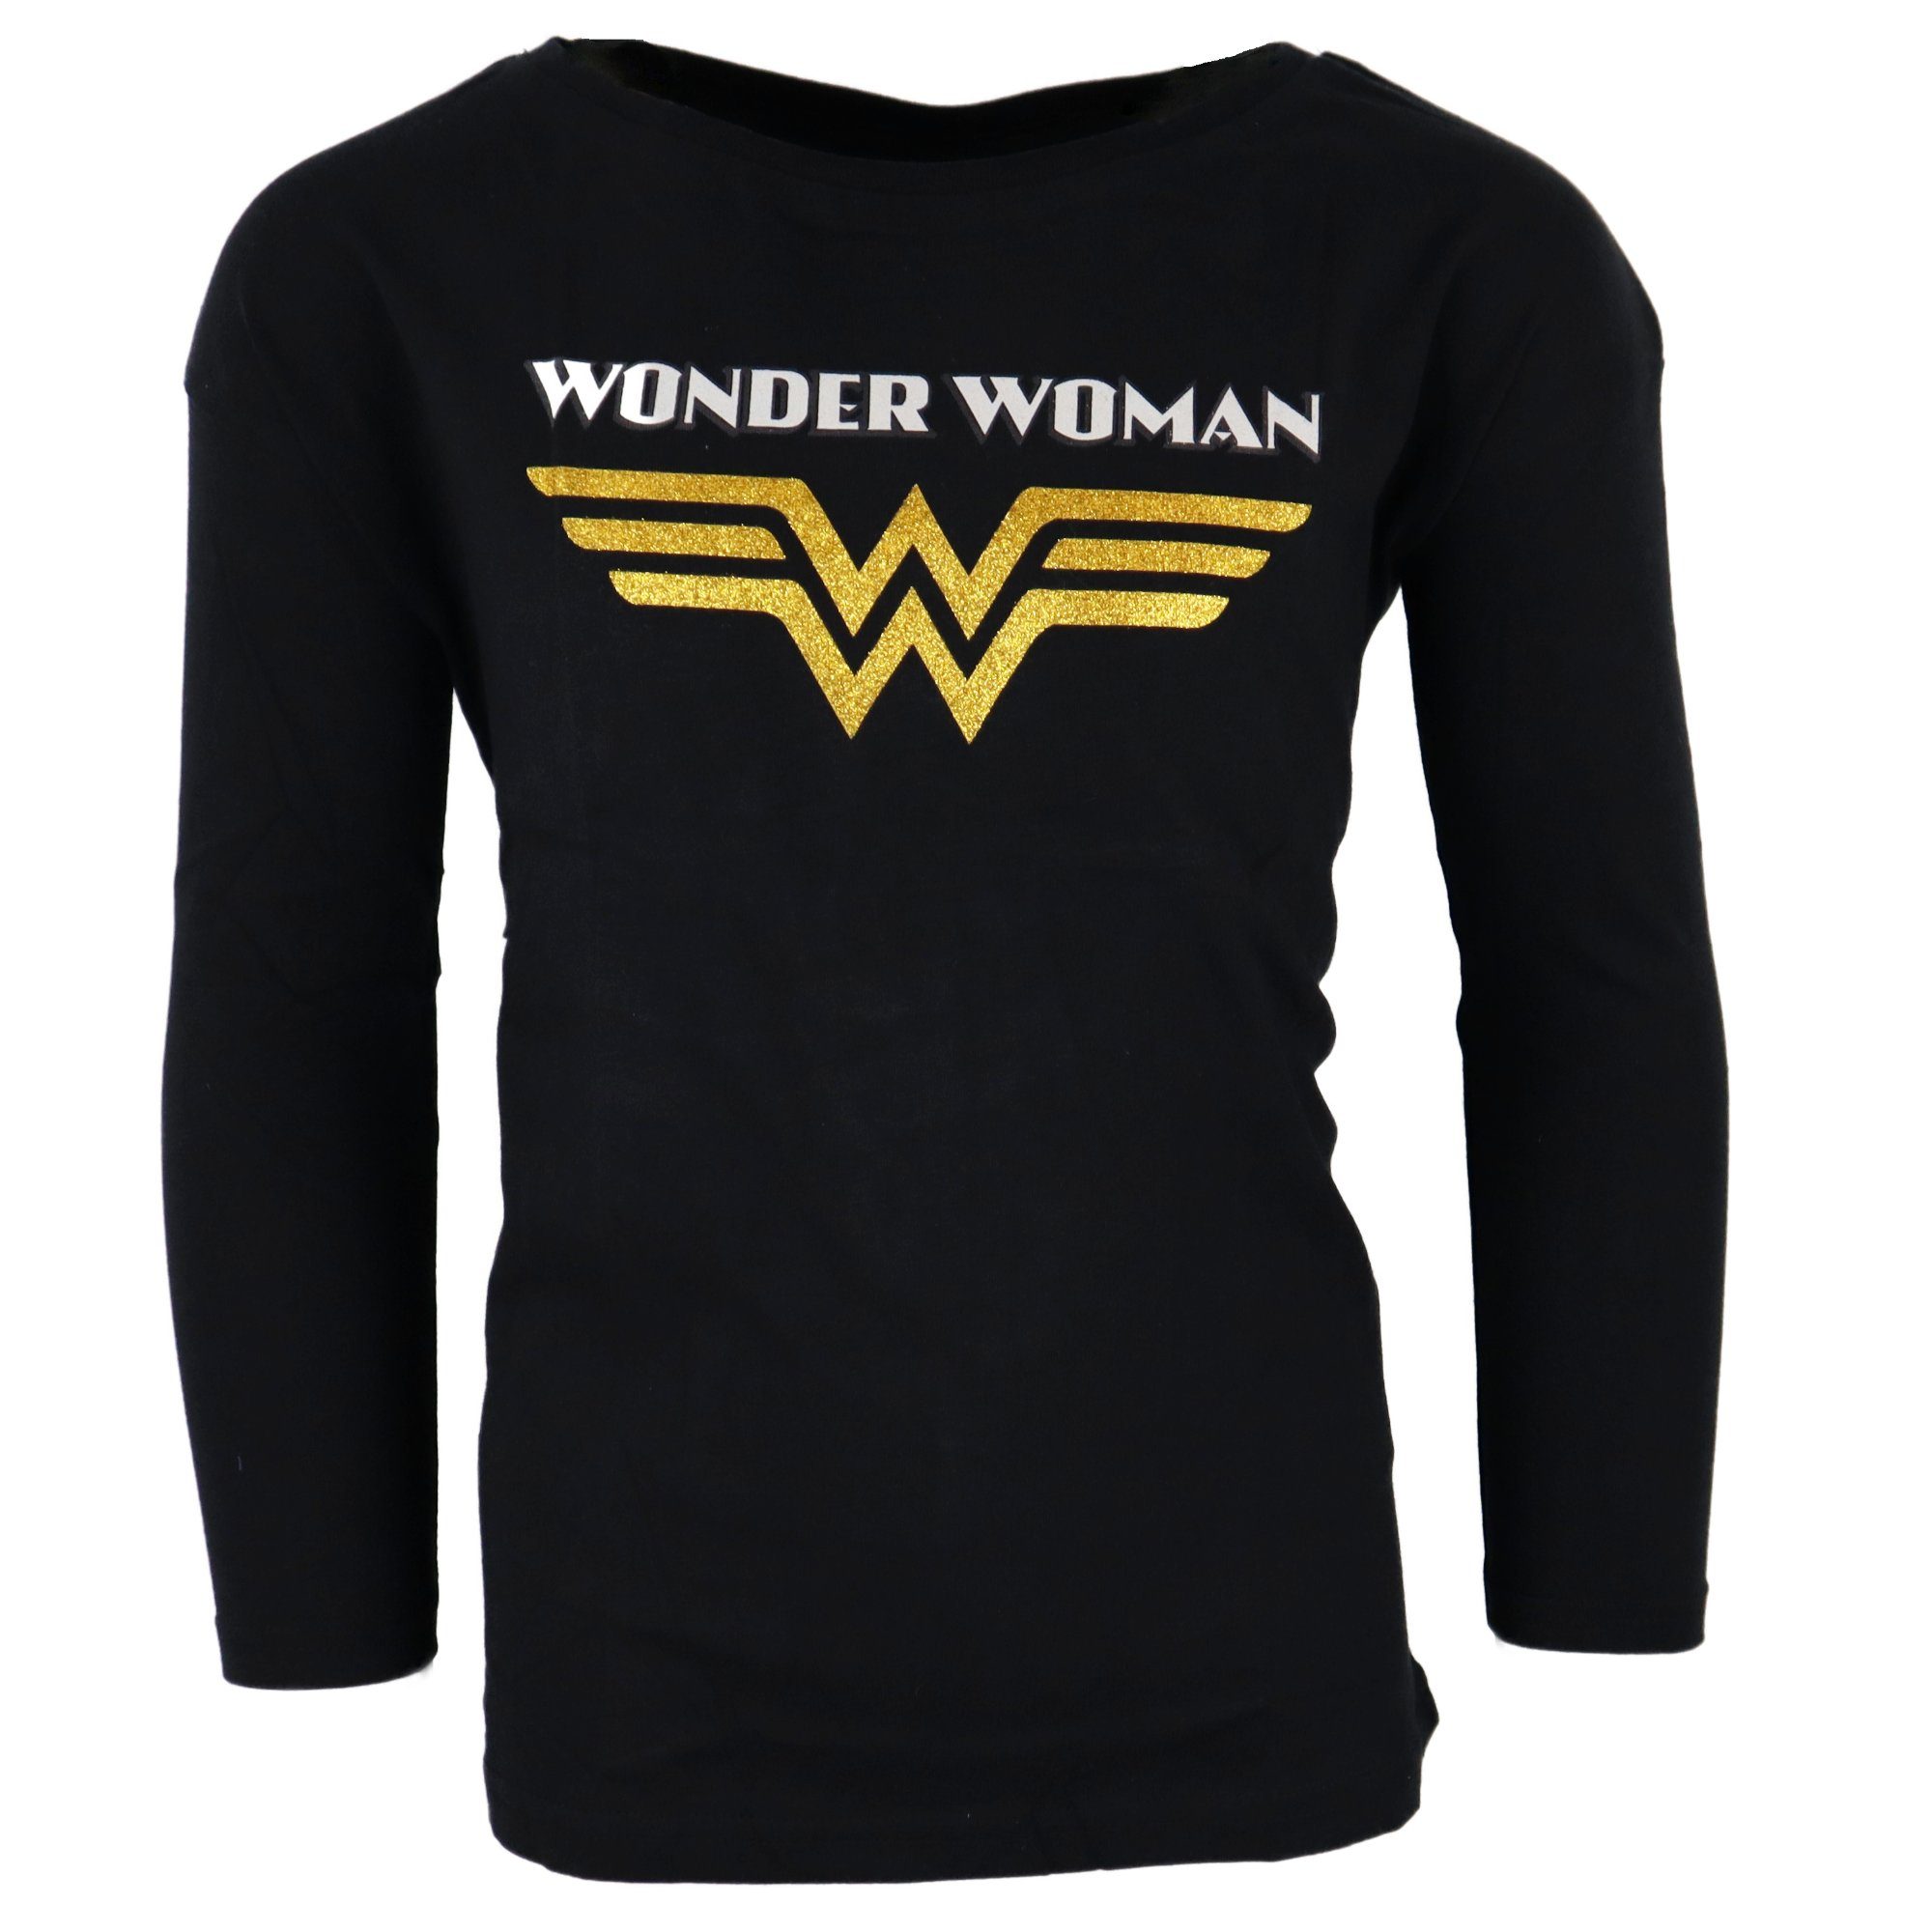 Wonder Woman Langarmshirt Kinder Shirt Gr. 128 bis 158, Baumwolle, Schwarz